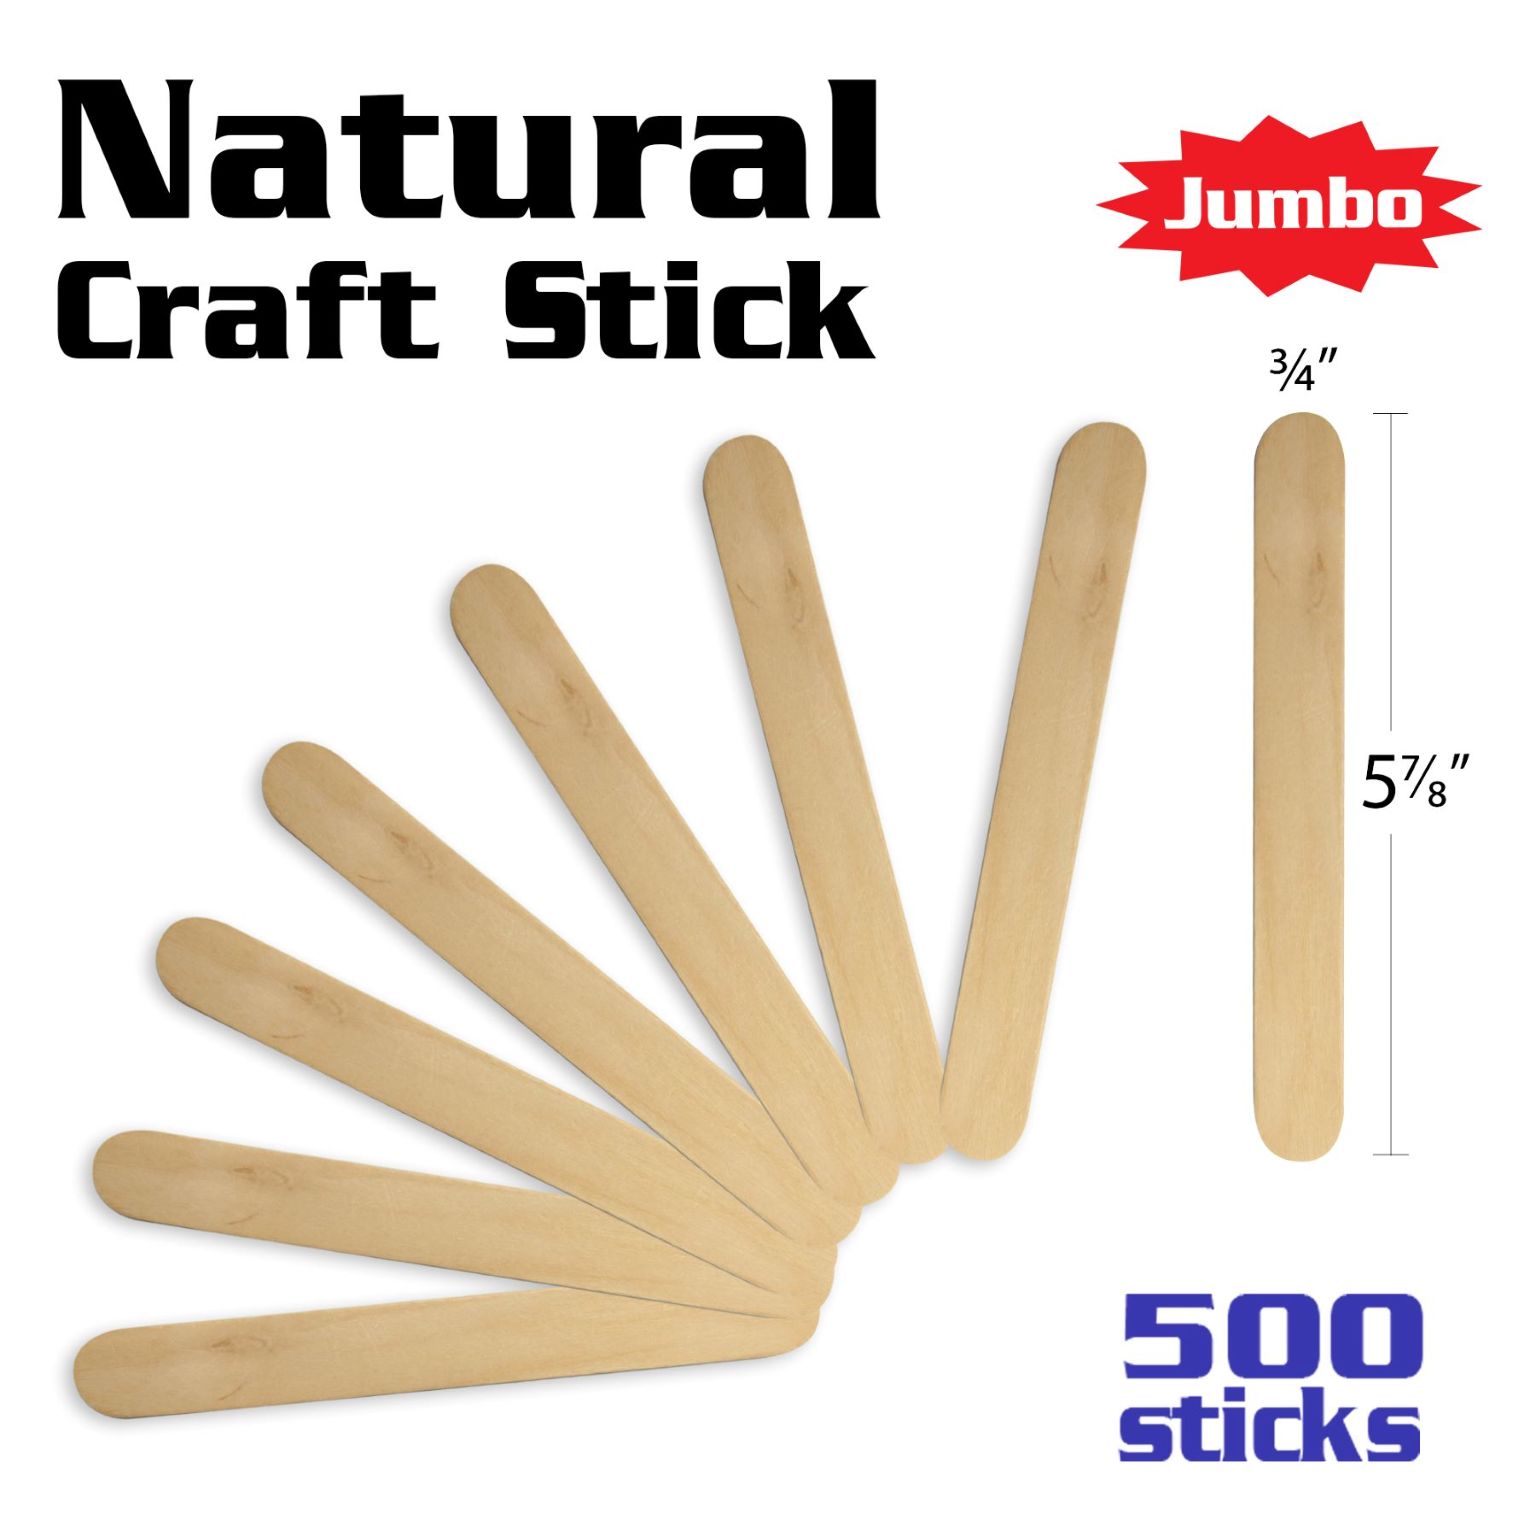 Wholesale Natural Craft Sticks - Jumbo, 500 Pack - DollarDays